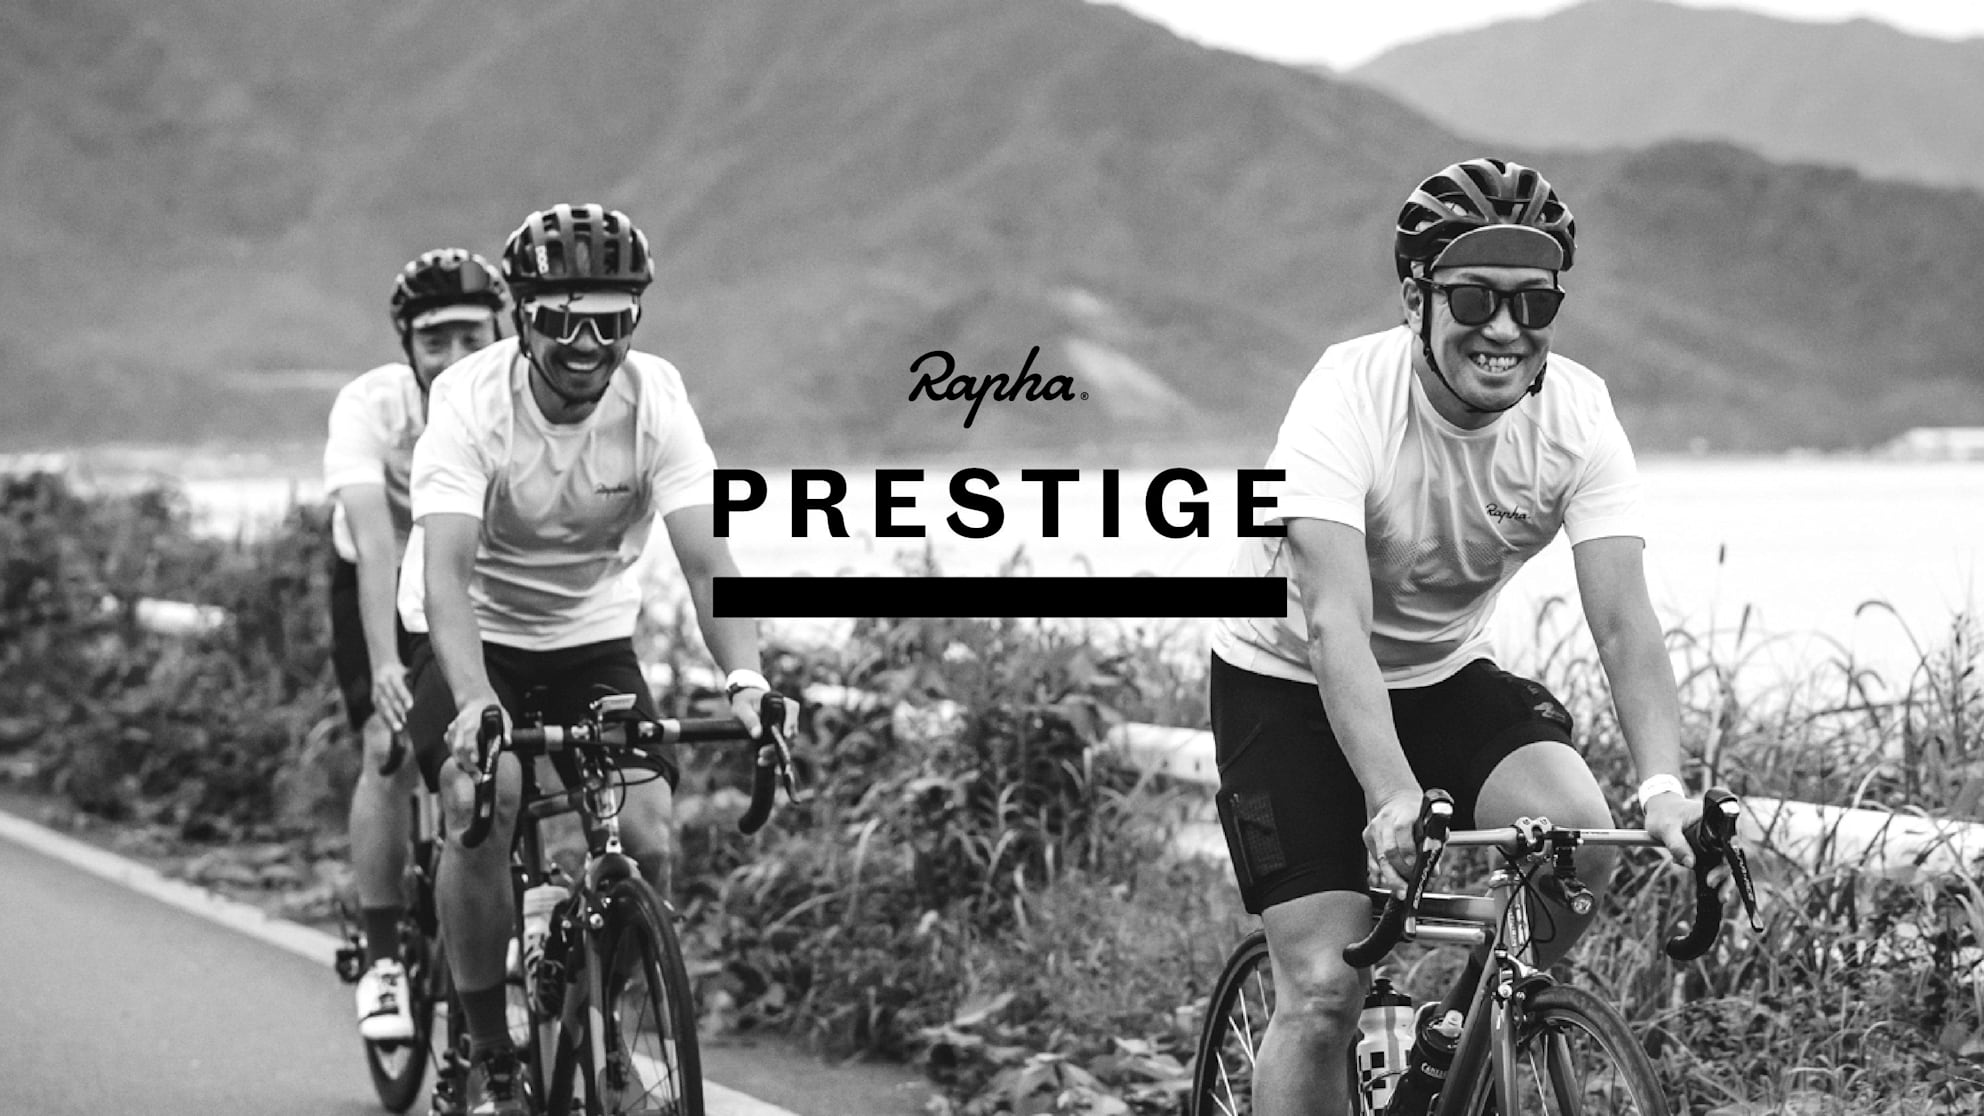 The Rapha Prestige Landing page